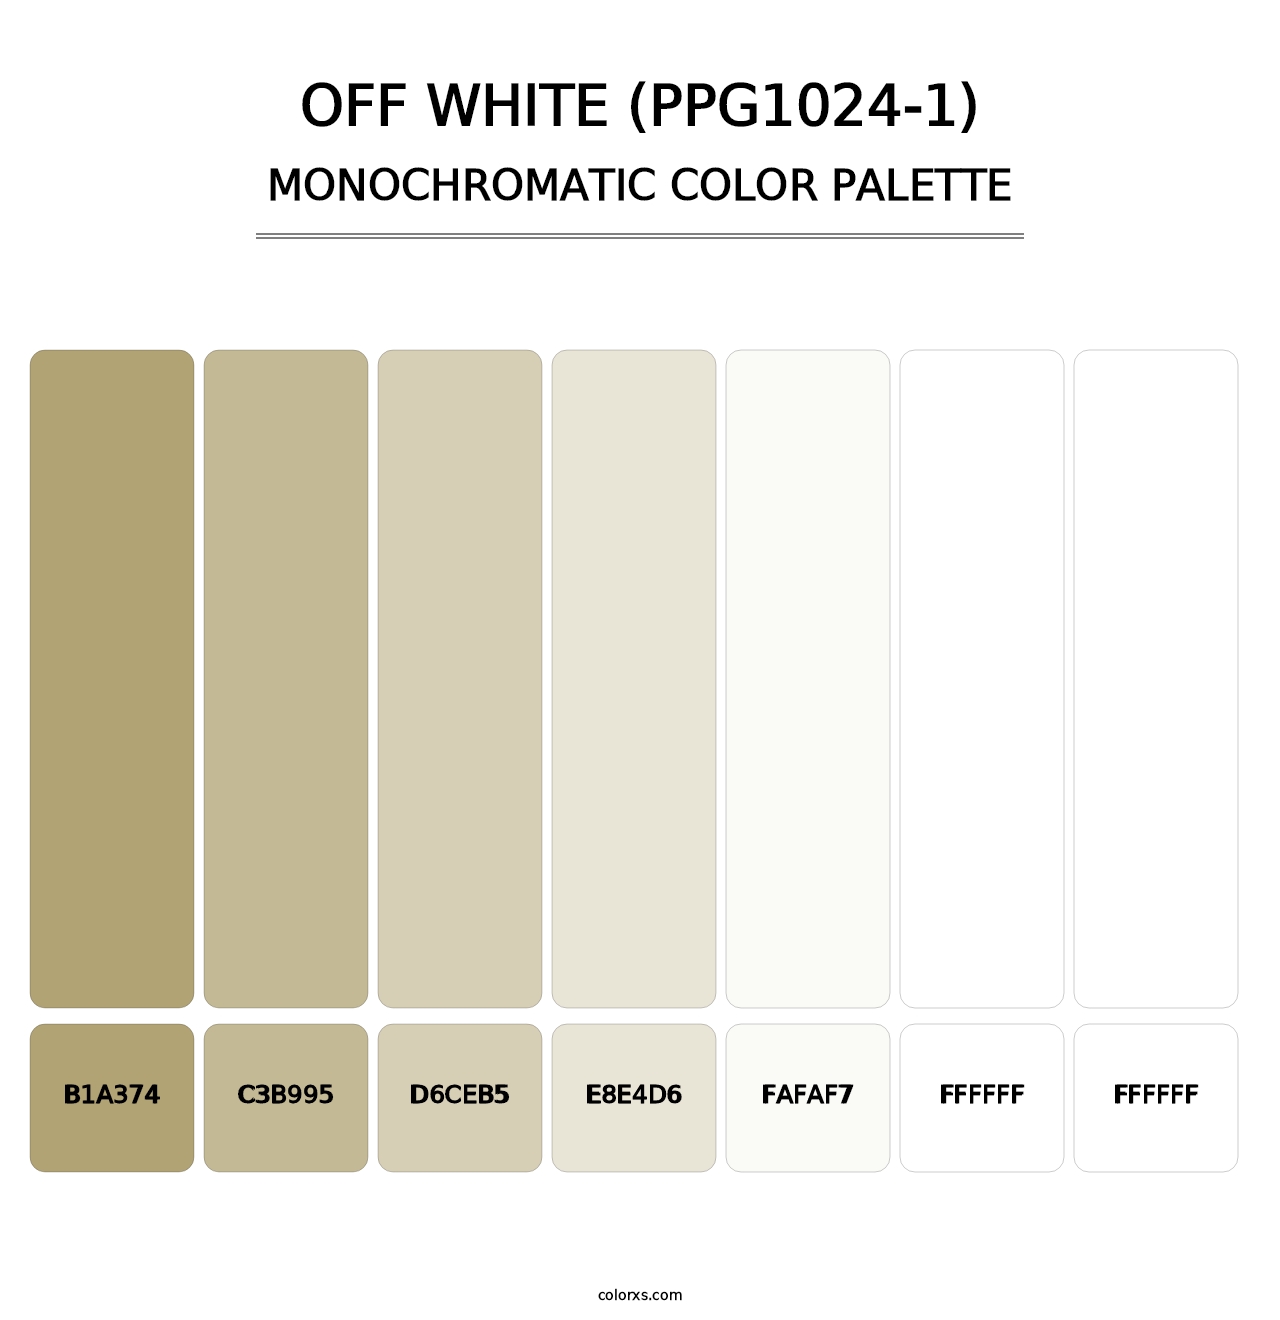 Off White (PPG1024-1) - Monochromatic Color Palette